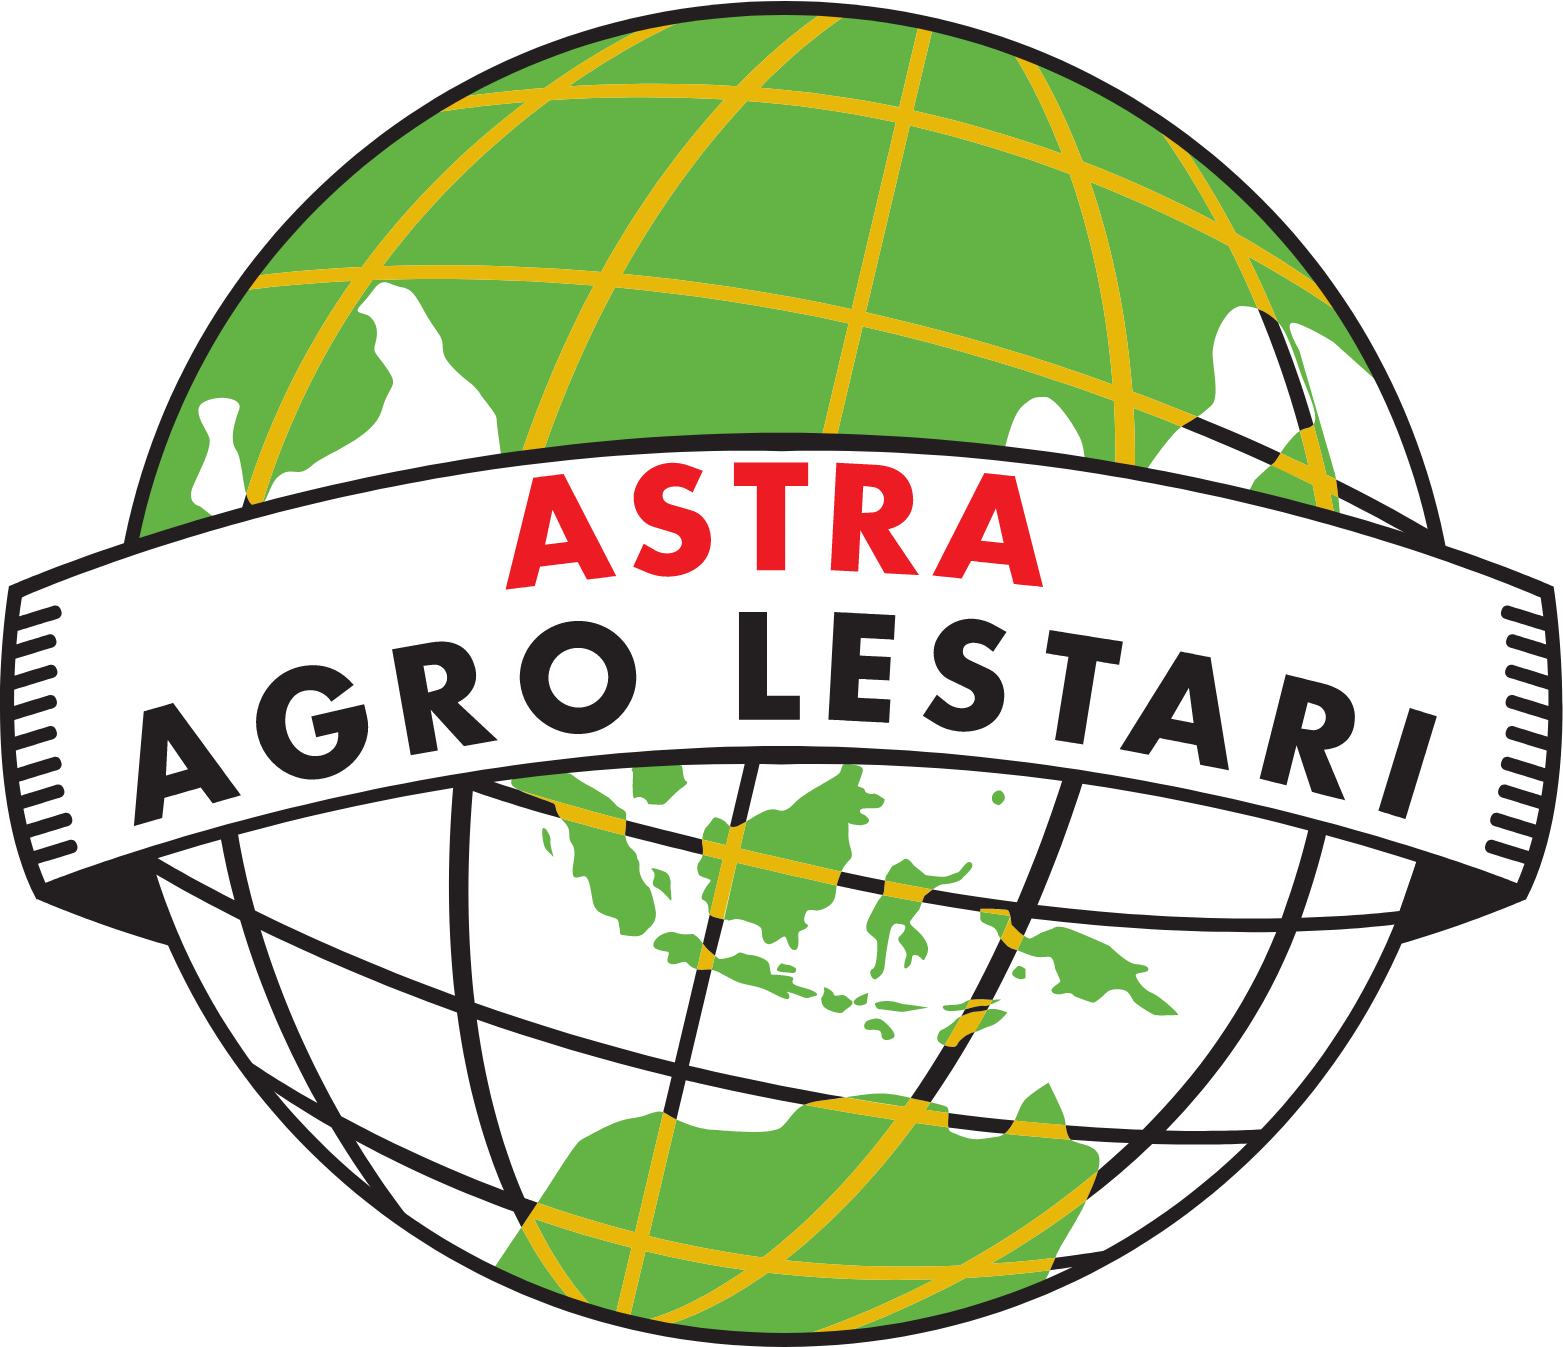 Astra Agro Lestari logo (transparent PNG)